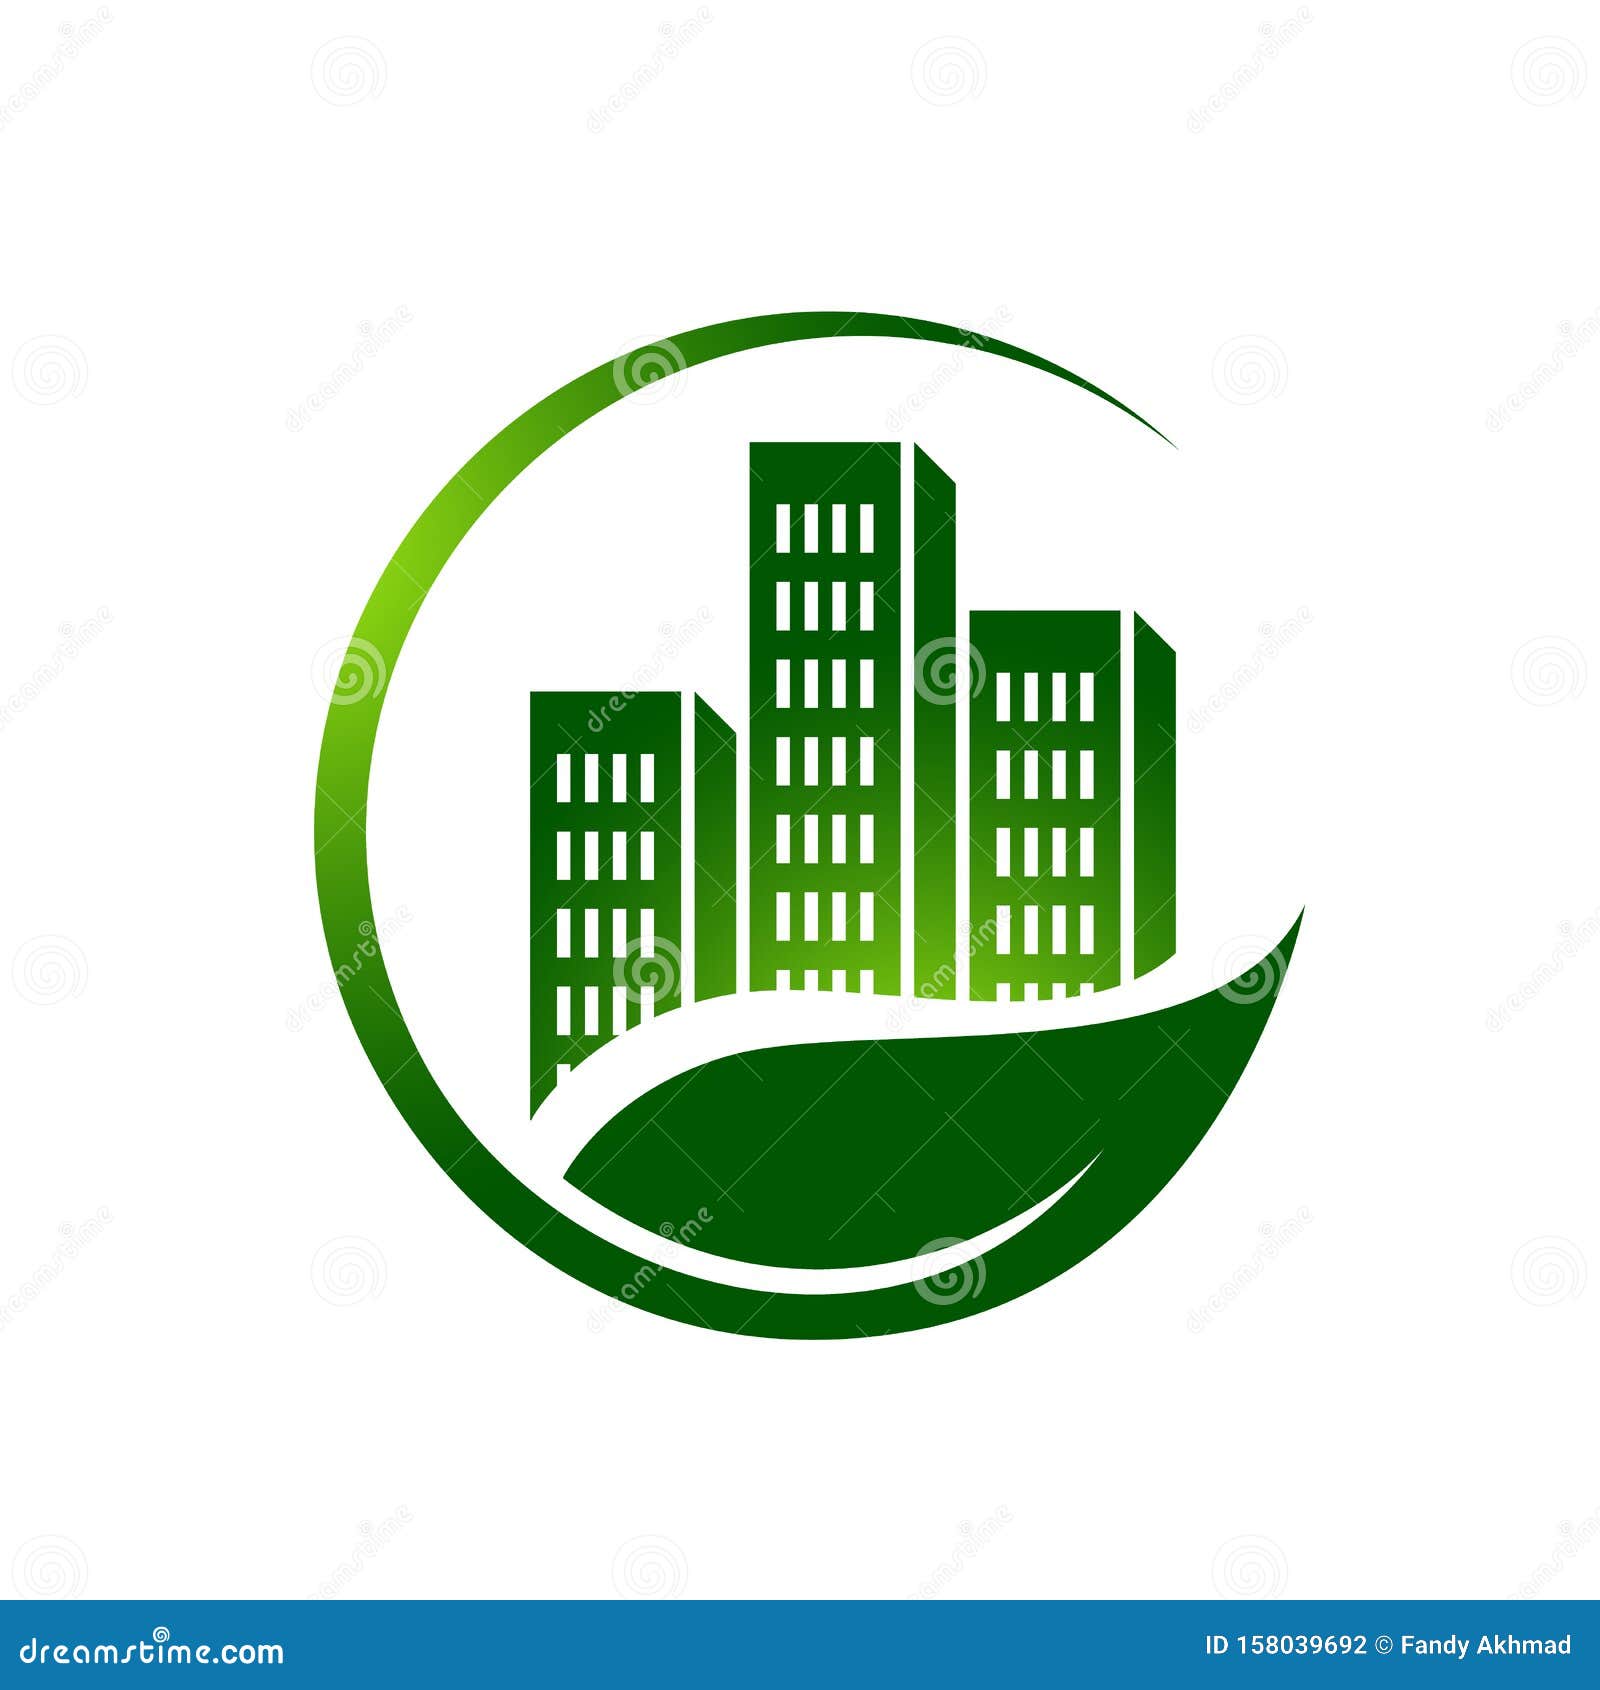 Environment Friendly Home Eco Green House Logo Vector Design Stock Vector - of energetic, 158039692